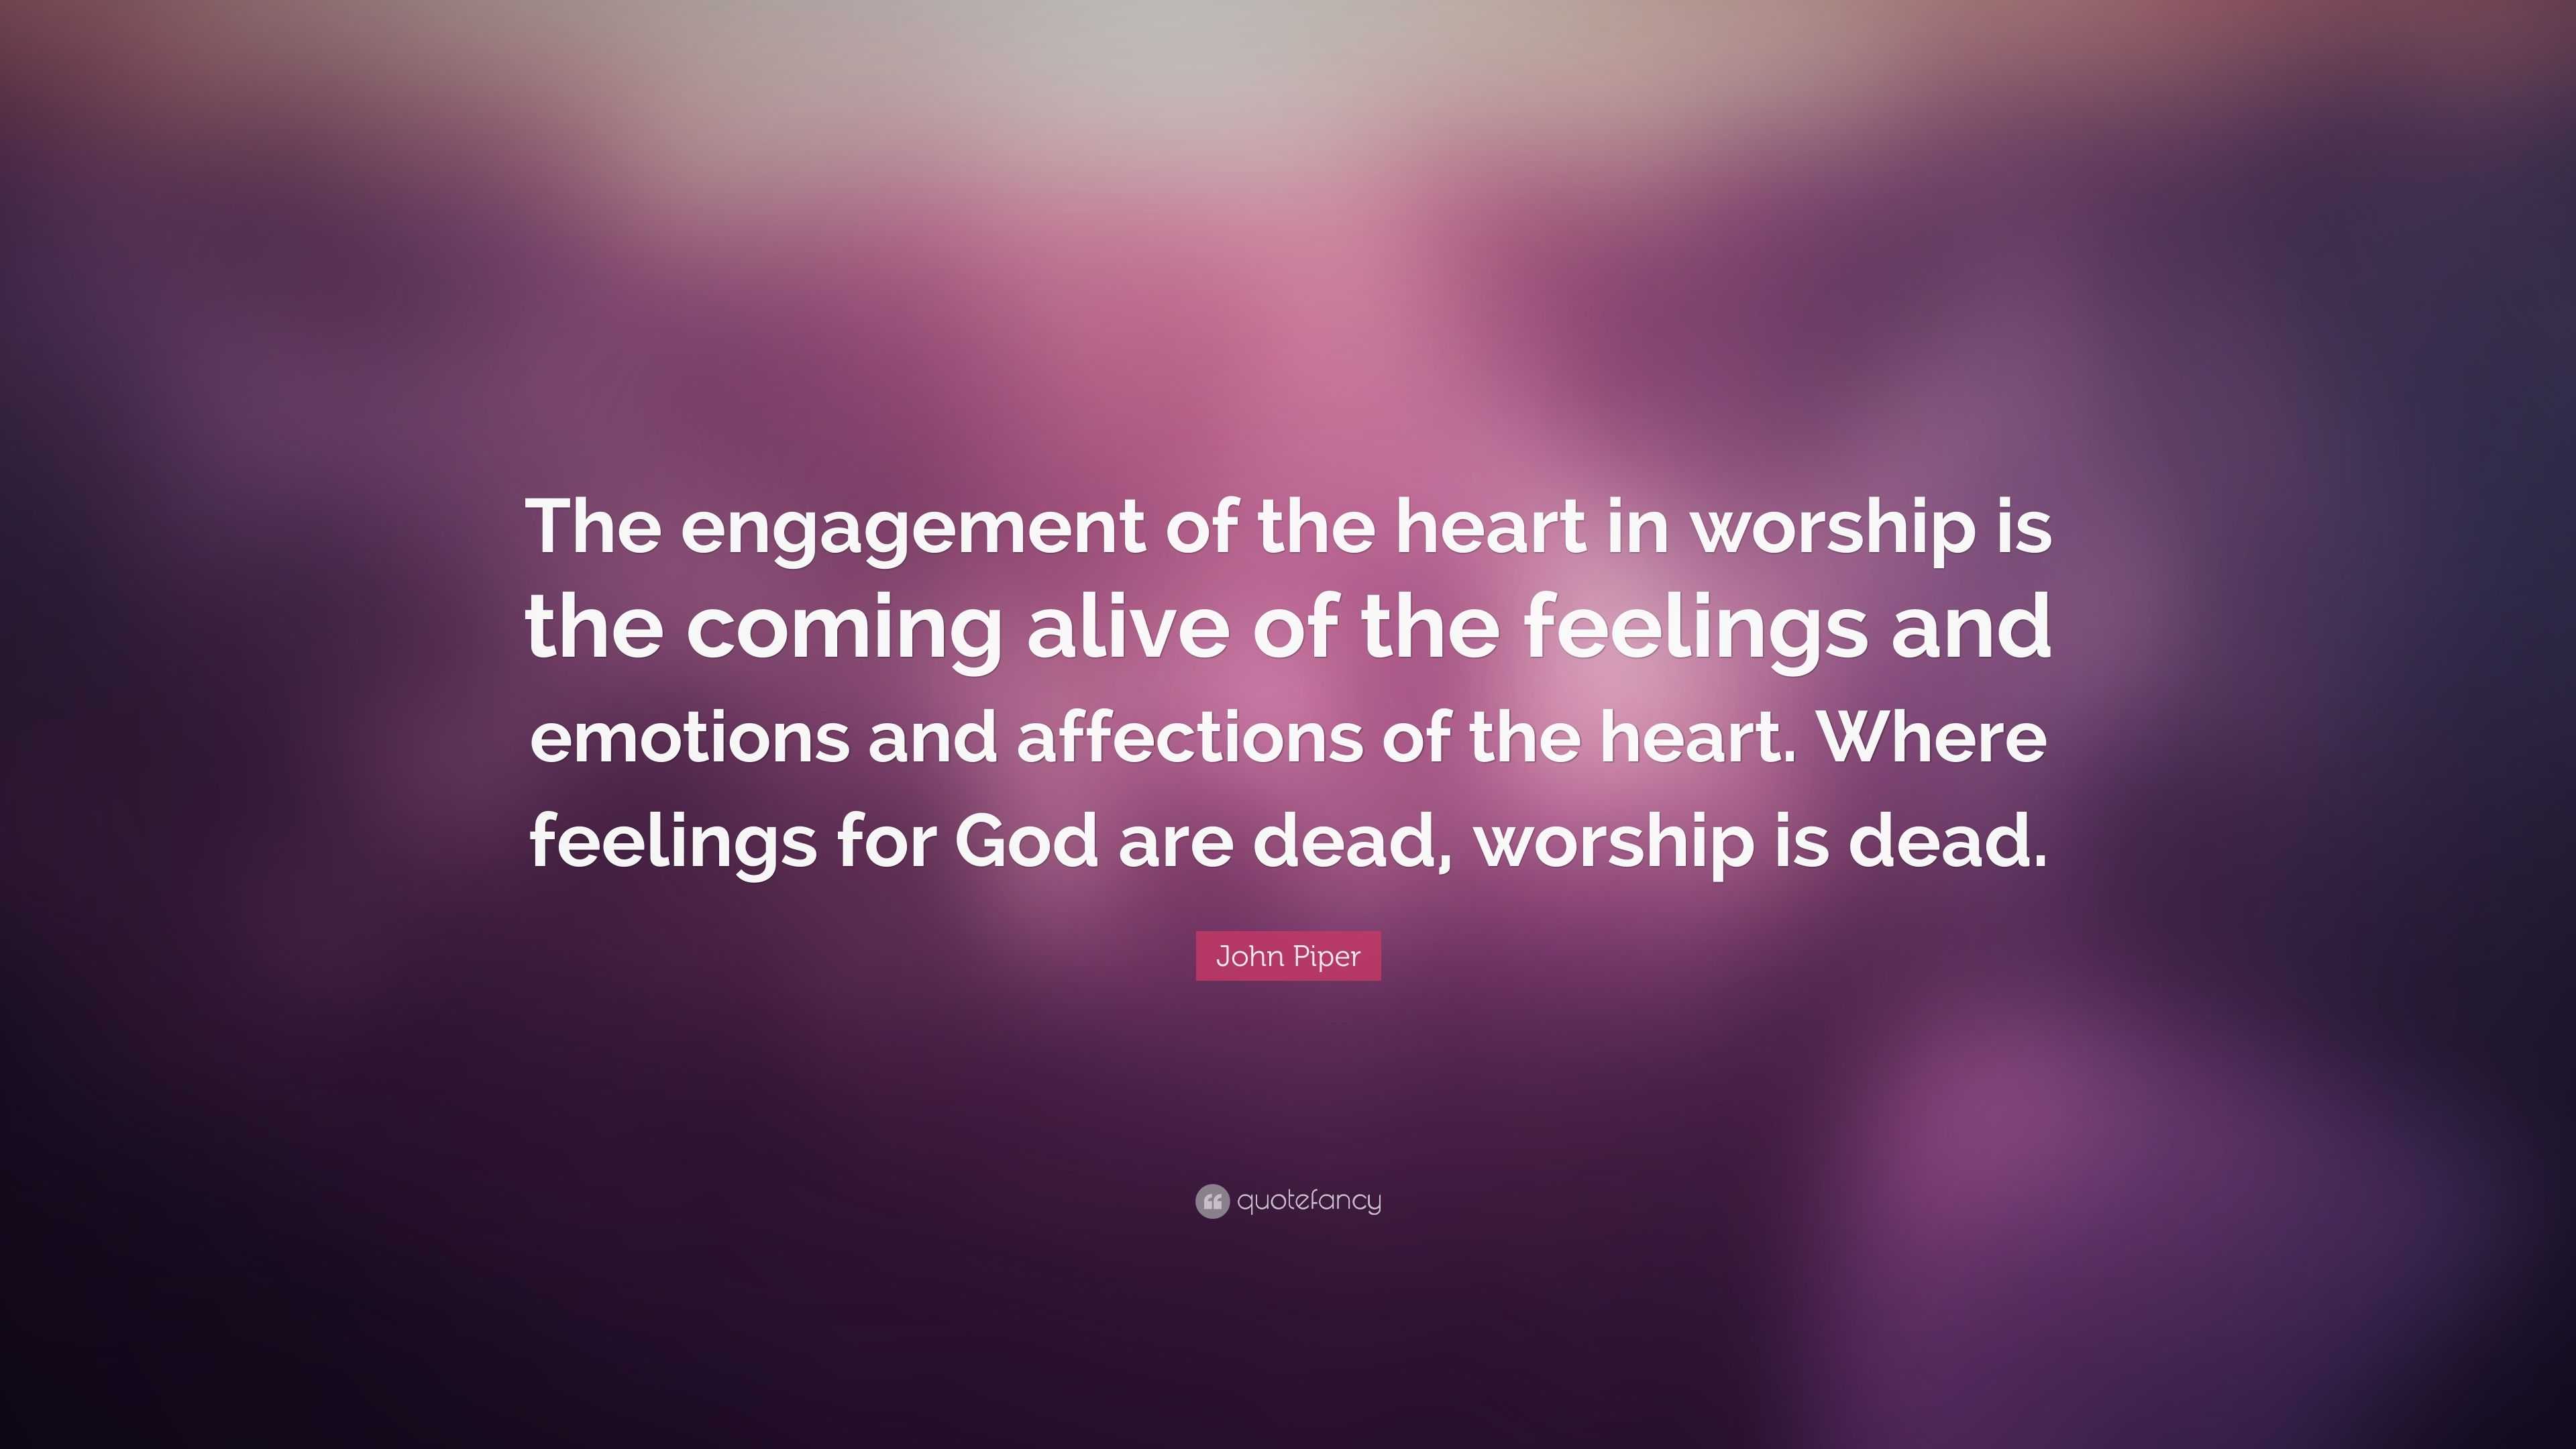 John Piper quote: The inner essence of worship is cherishing